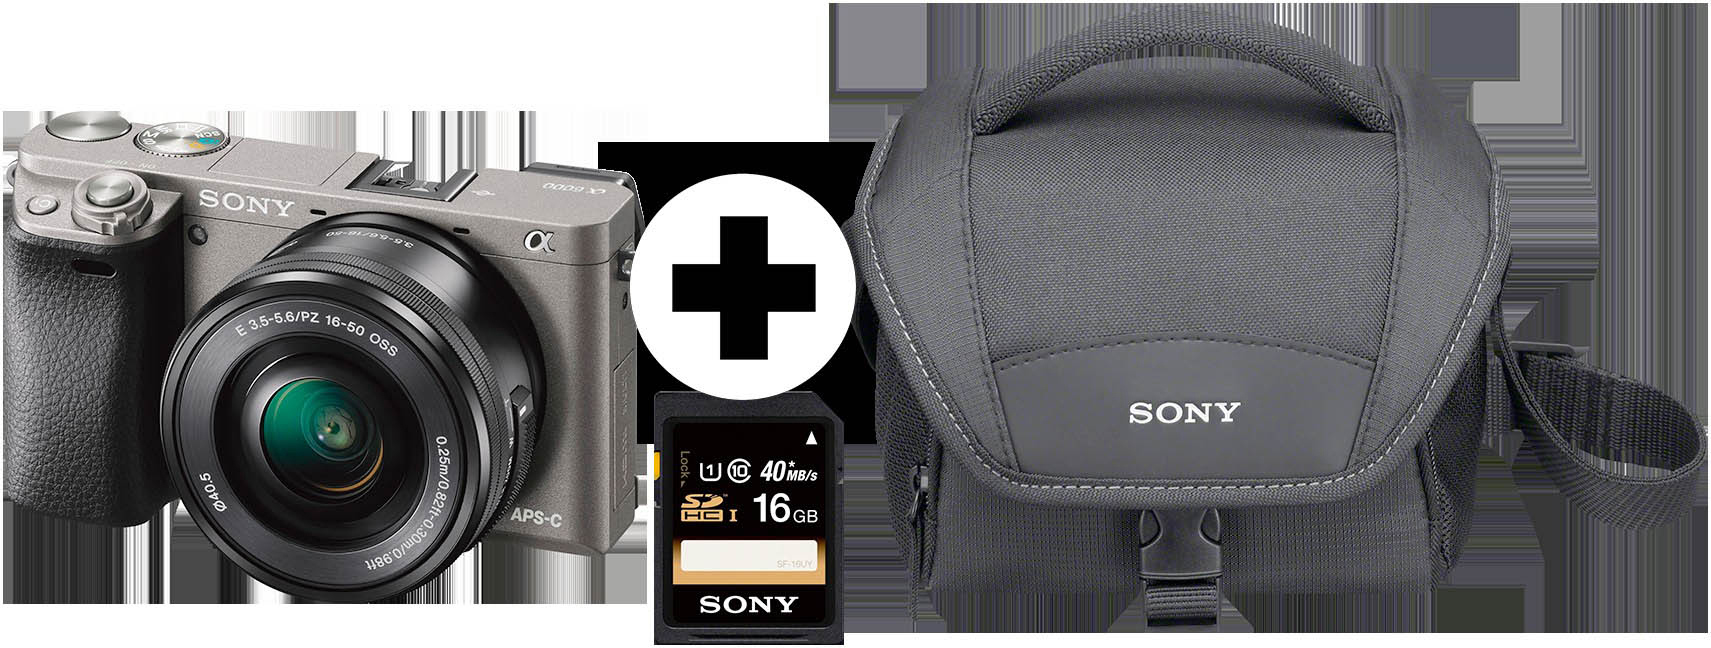 KIT 7,6 16-50 + Display, WLAN Alpha cm SONY Speicherkarte Systemkamera Objektiv Tasche (ILCE-6000L) mm, + 6000 mit